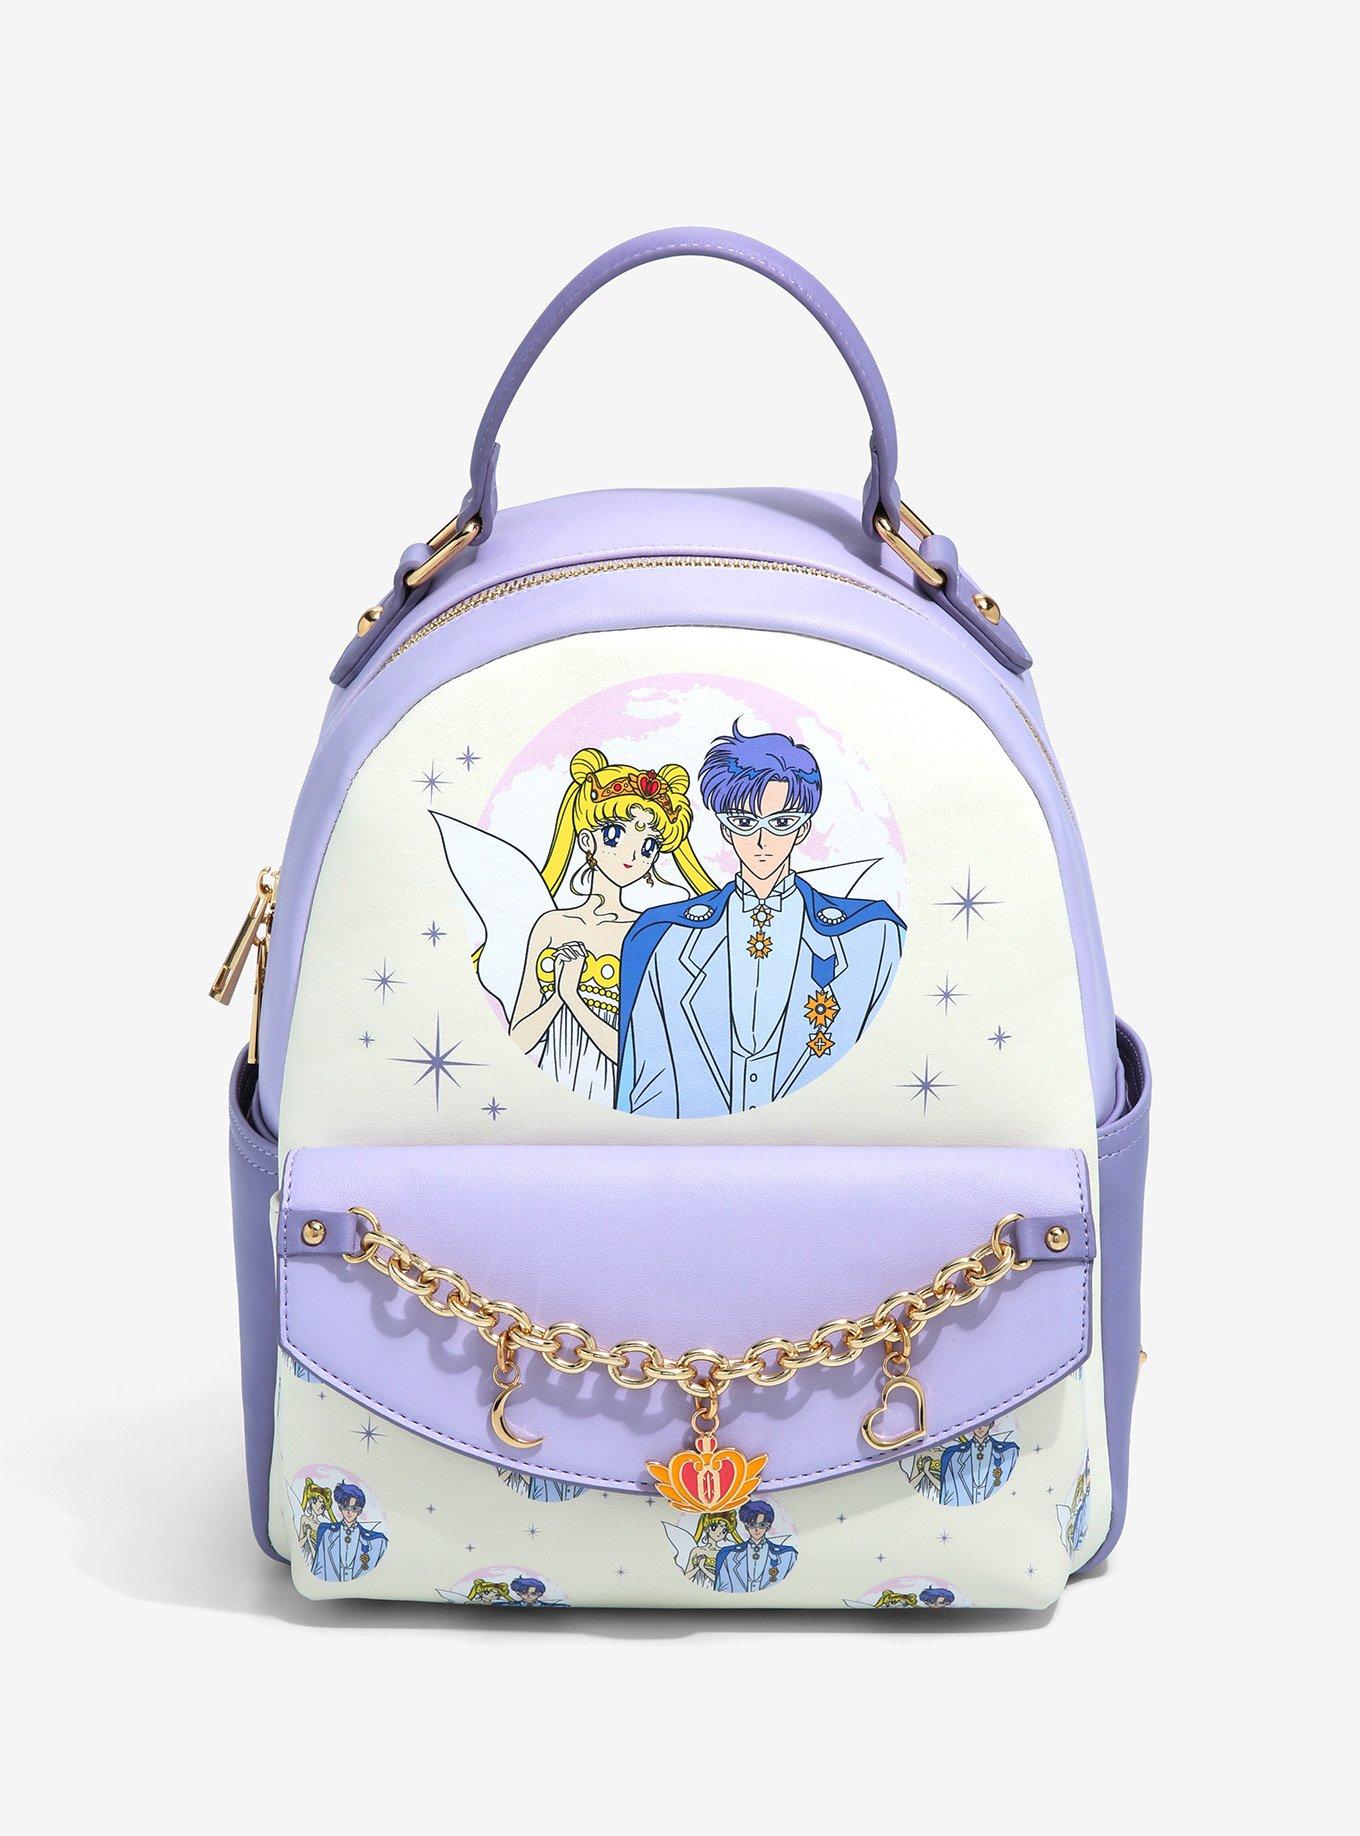 How cute is the new louis vuitton handbag called the mini moon!! I